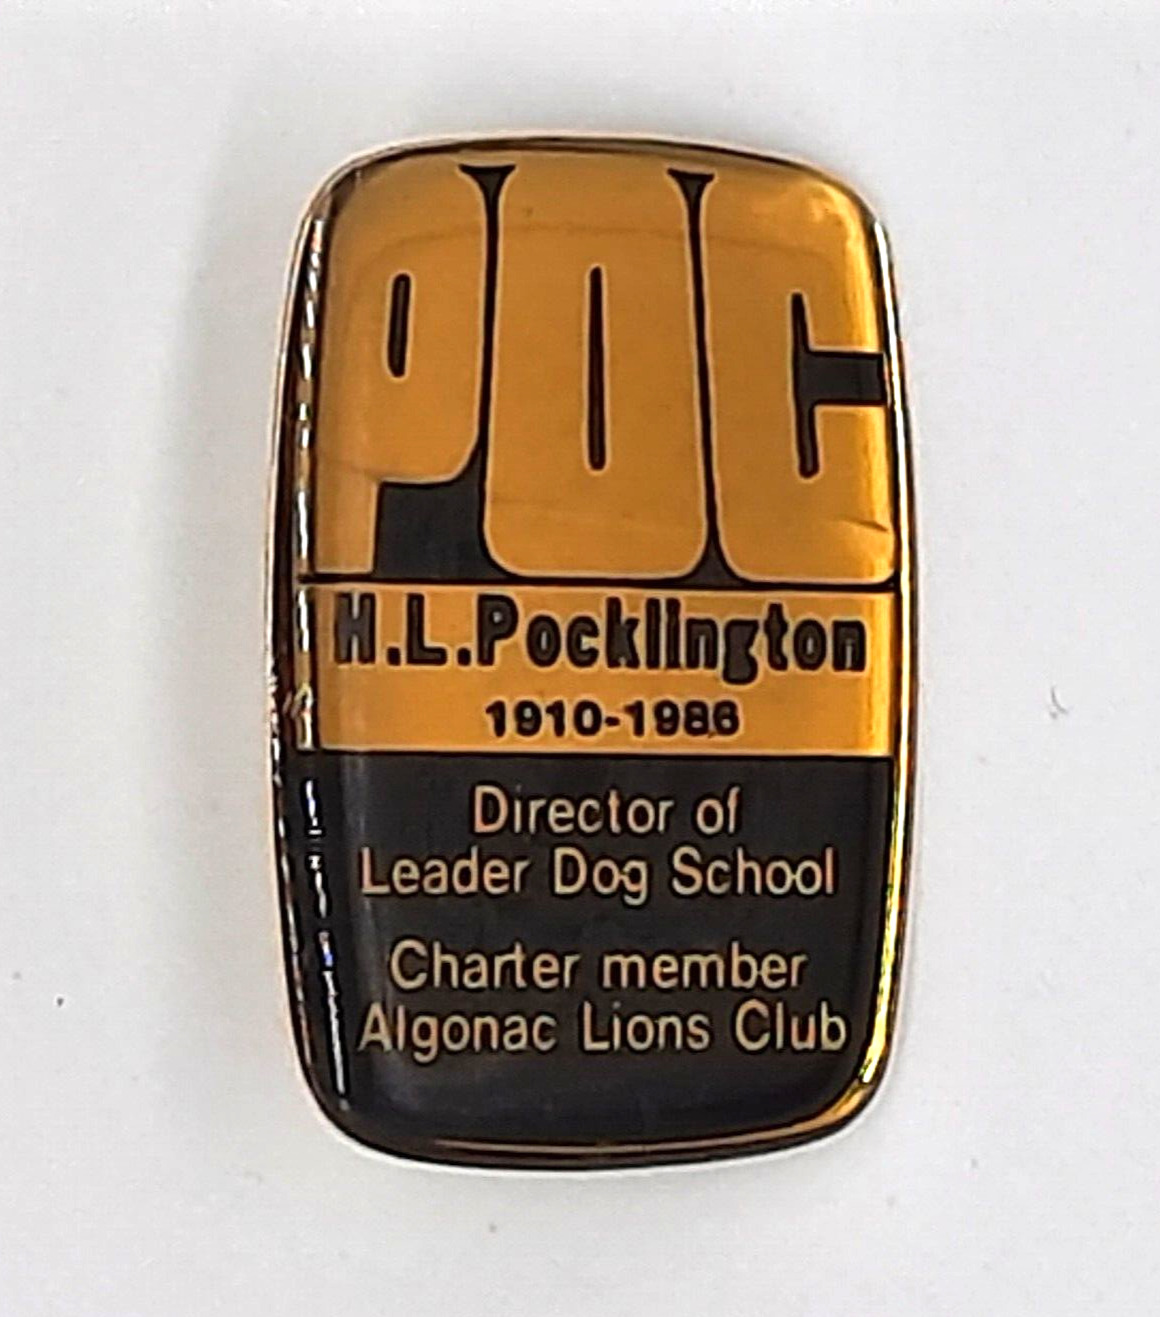 Algonac Lions Club Pin POC H. L. Pockington 1910-1986 Leader Dog School 11 D 2